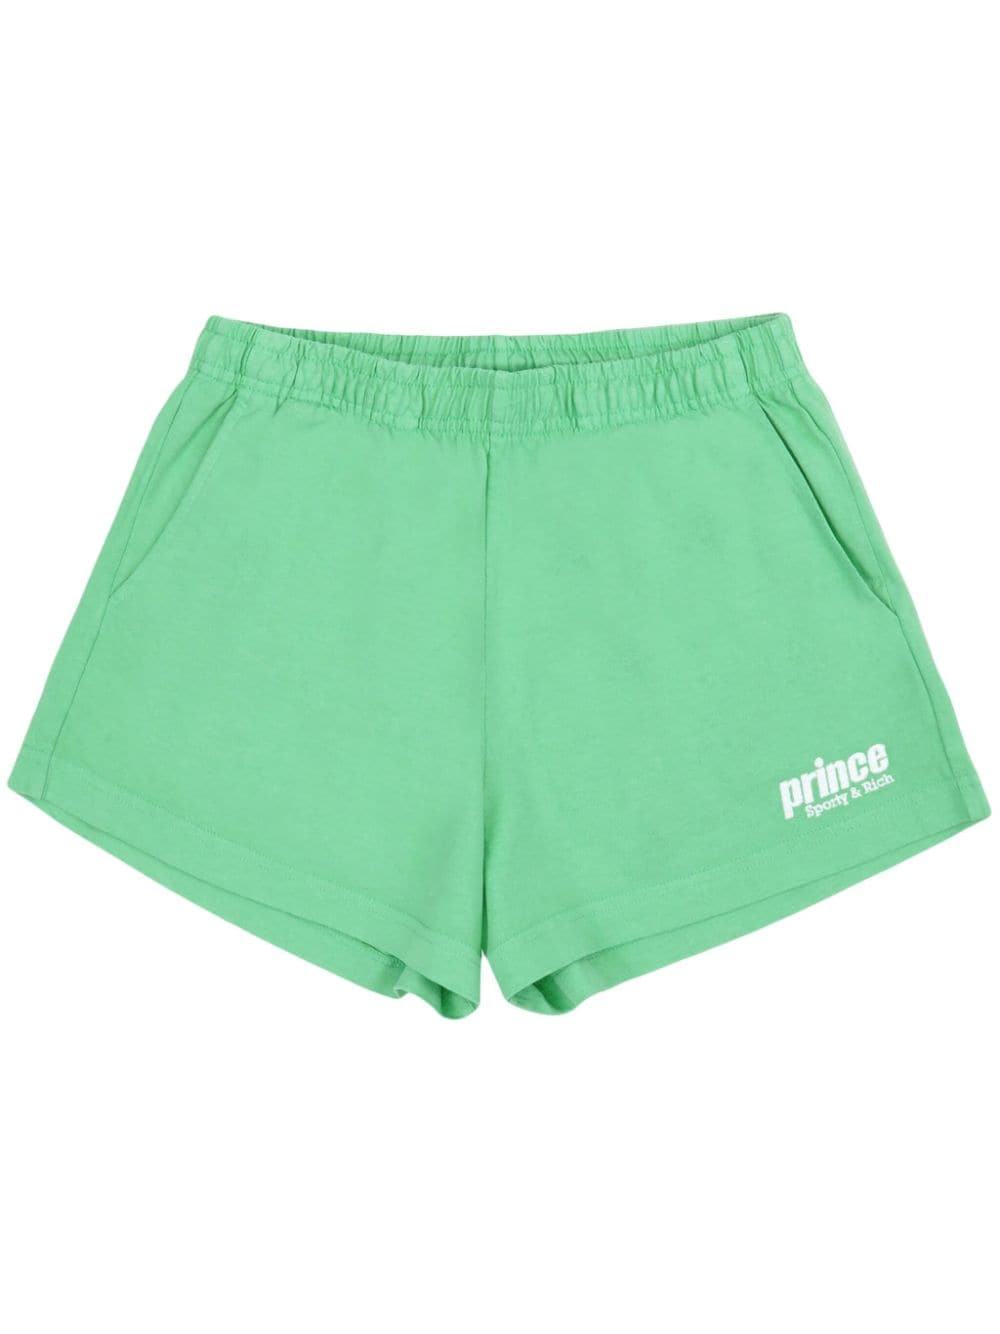 x Prince Disco cotton shorts